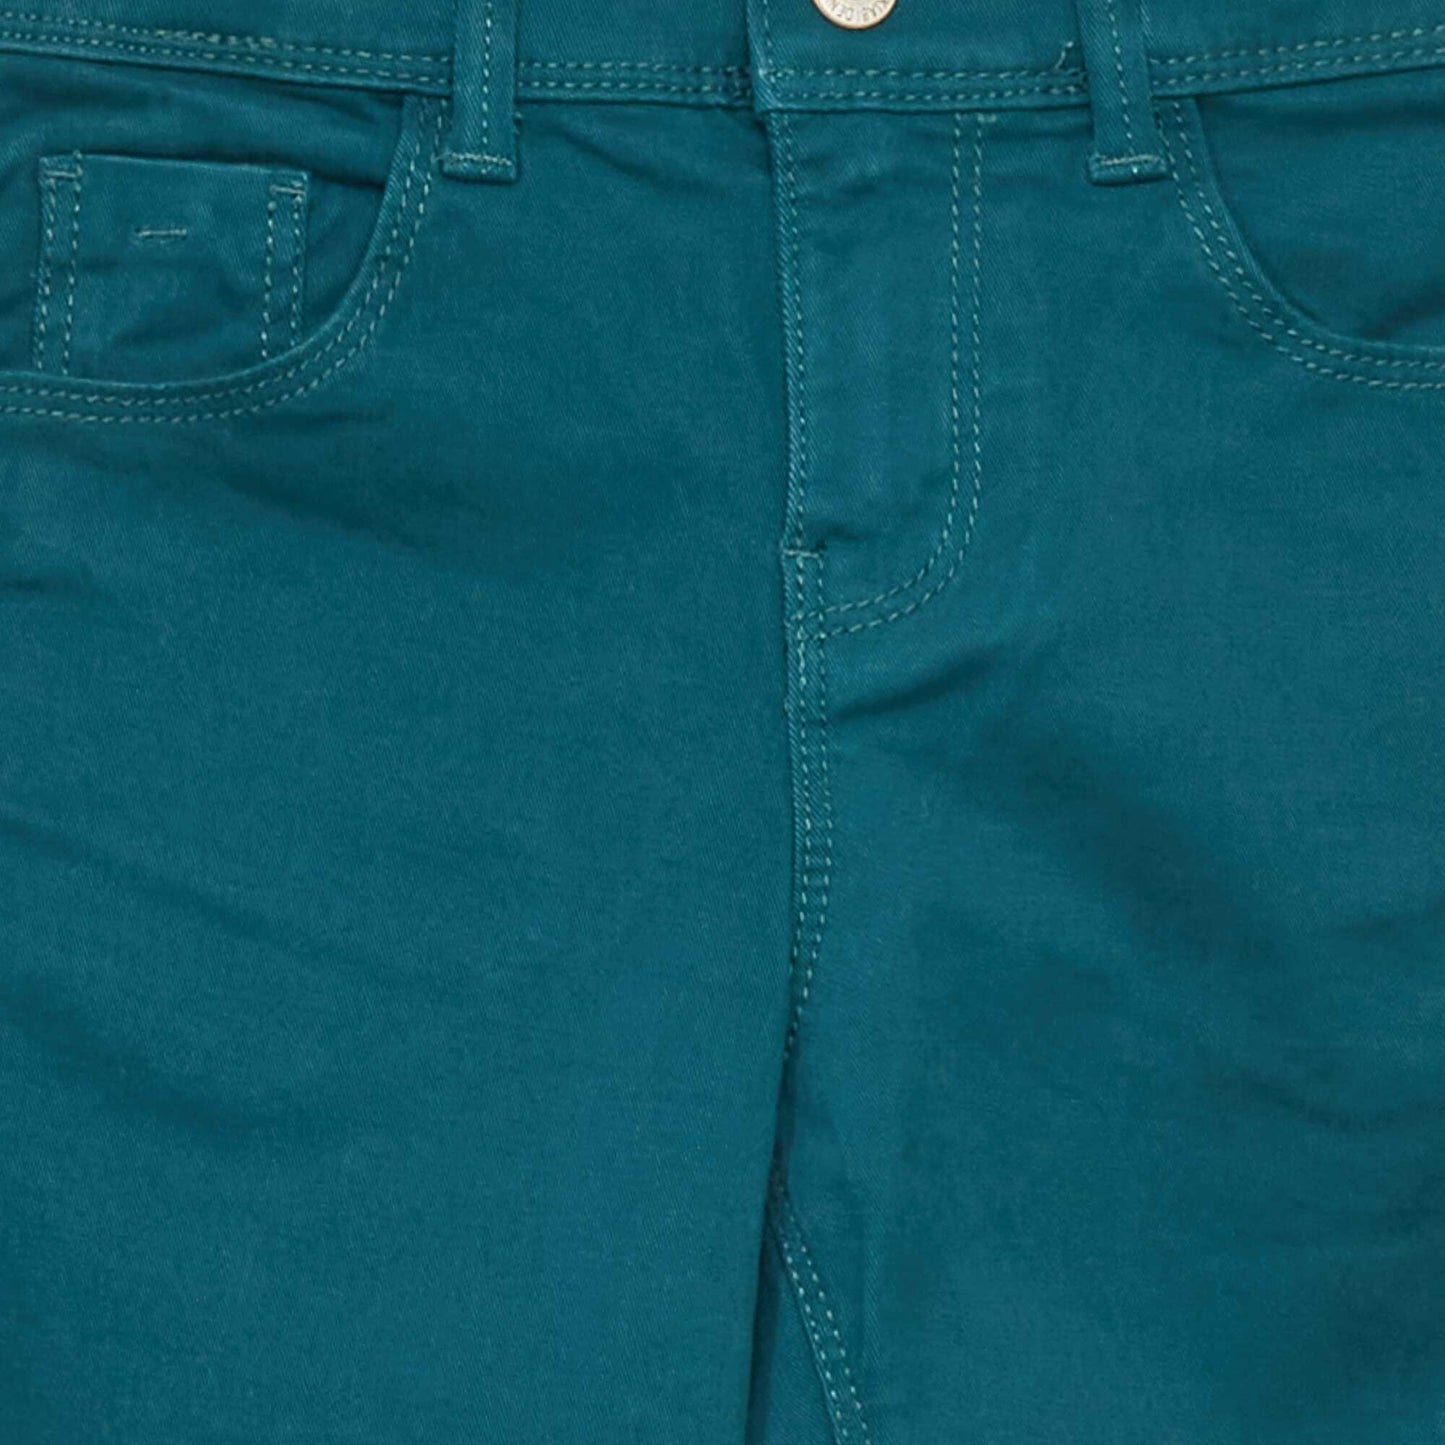 Jean skinny 5 poches vert